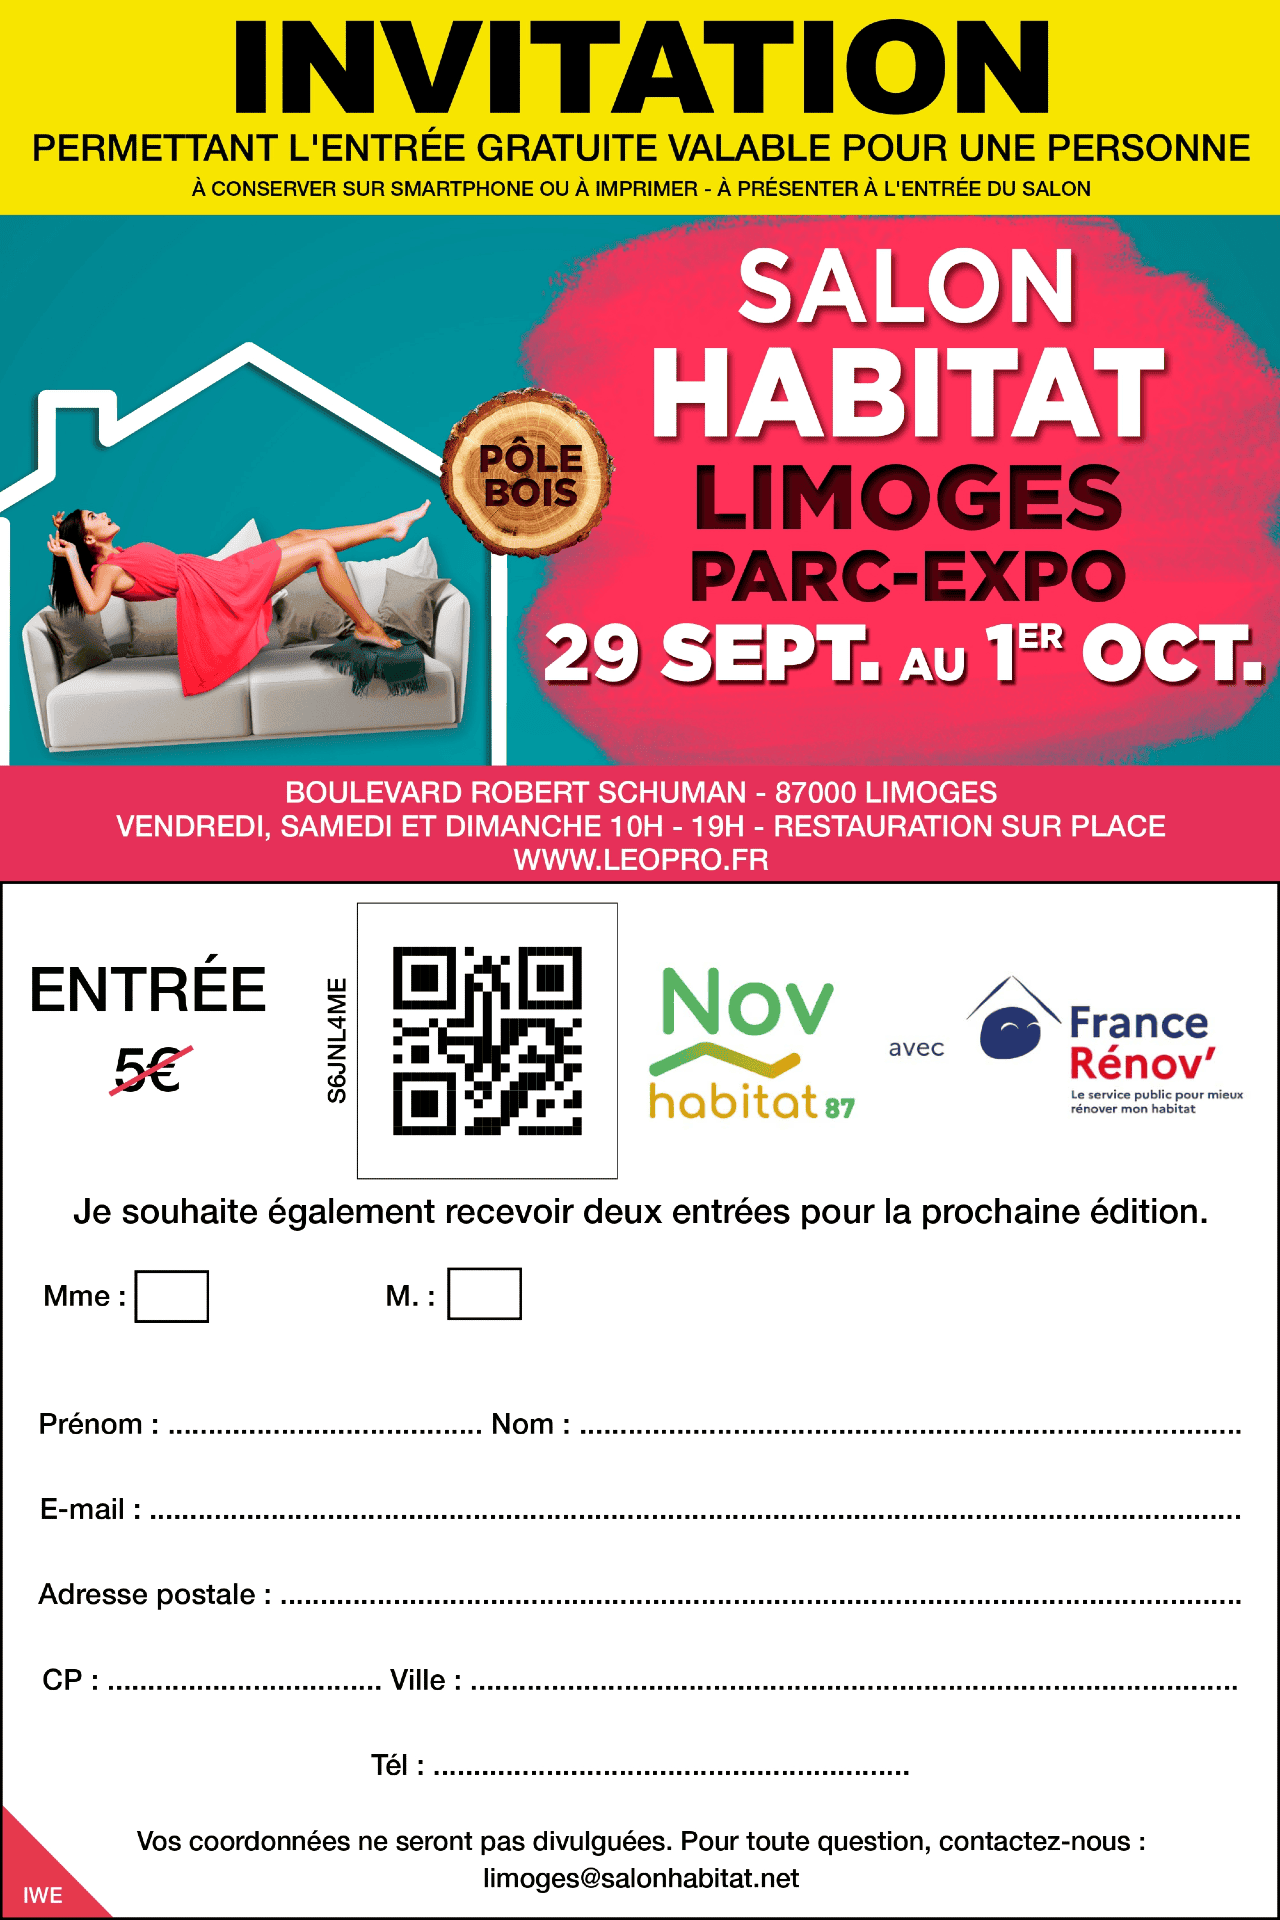 Salon-Habitat-Limoges-09.23-Invitation-gratuite-Nov-Habitat-87